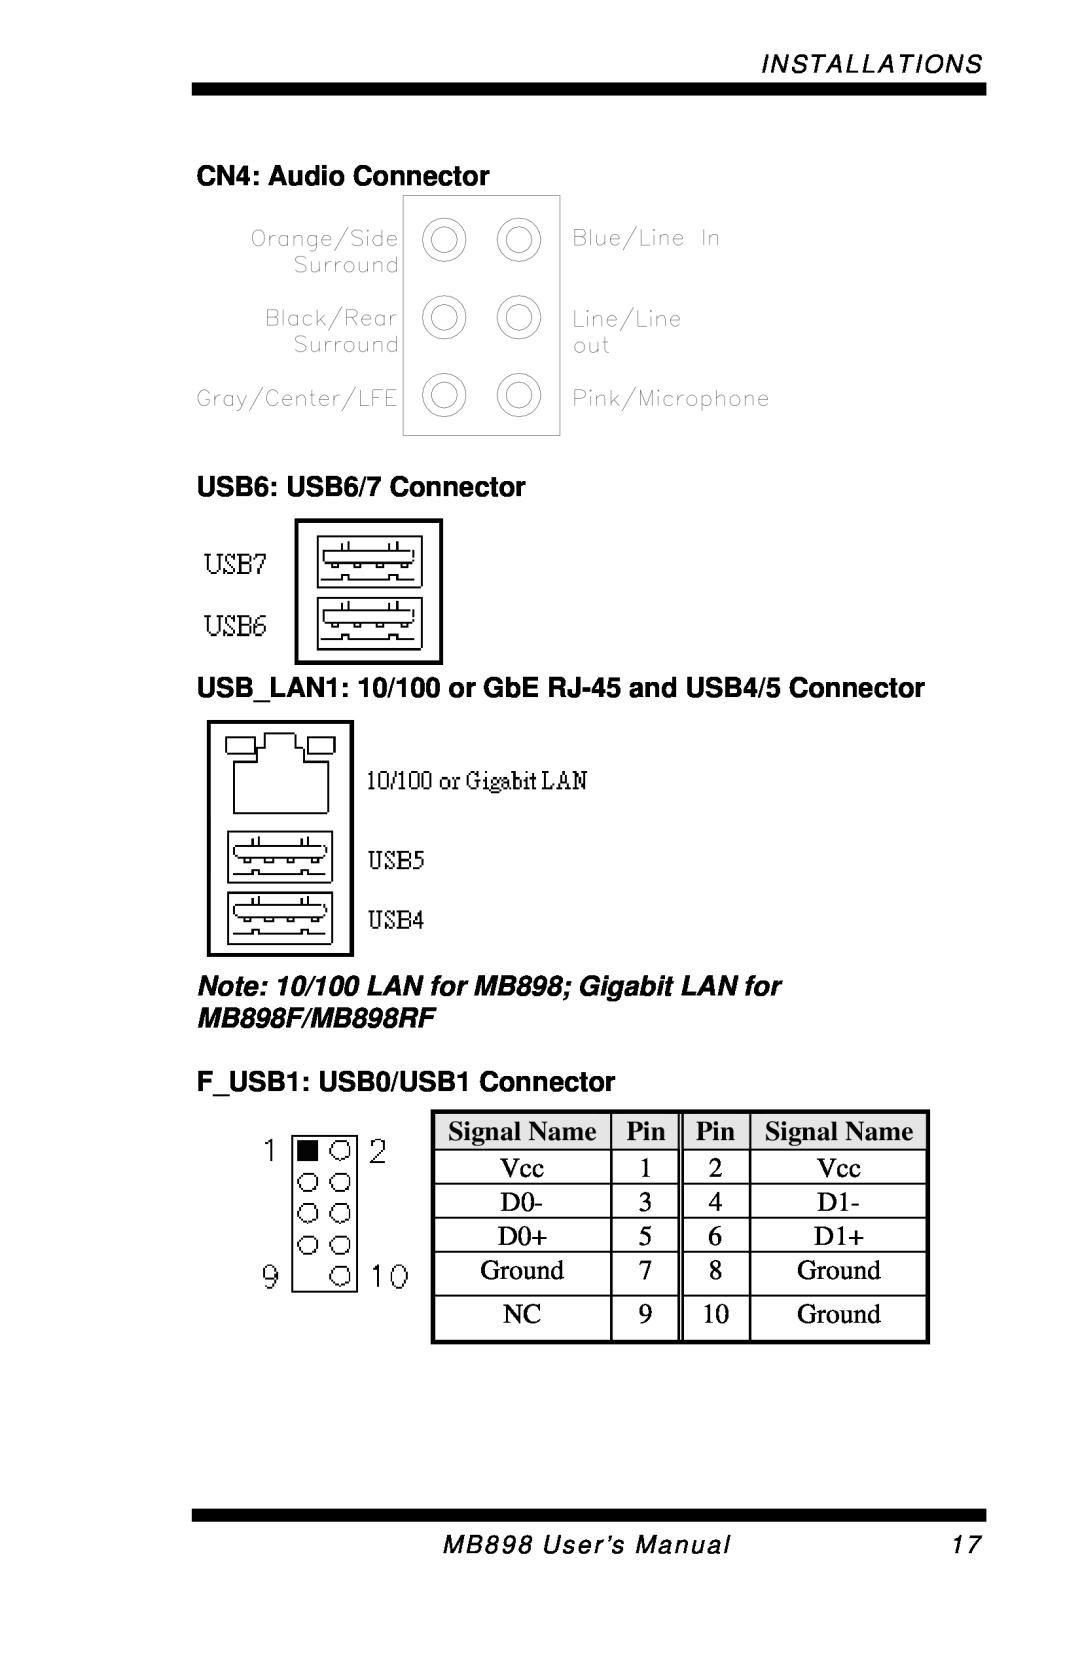 Intel MB898RF, MB898F CN4: Audio Connector USB6: USB6/7 Connector, USB_LAN1: 10/100 or GbE RJ-45and USB4/5 Connector 